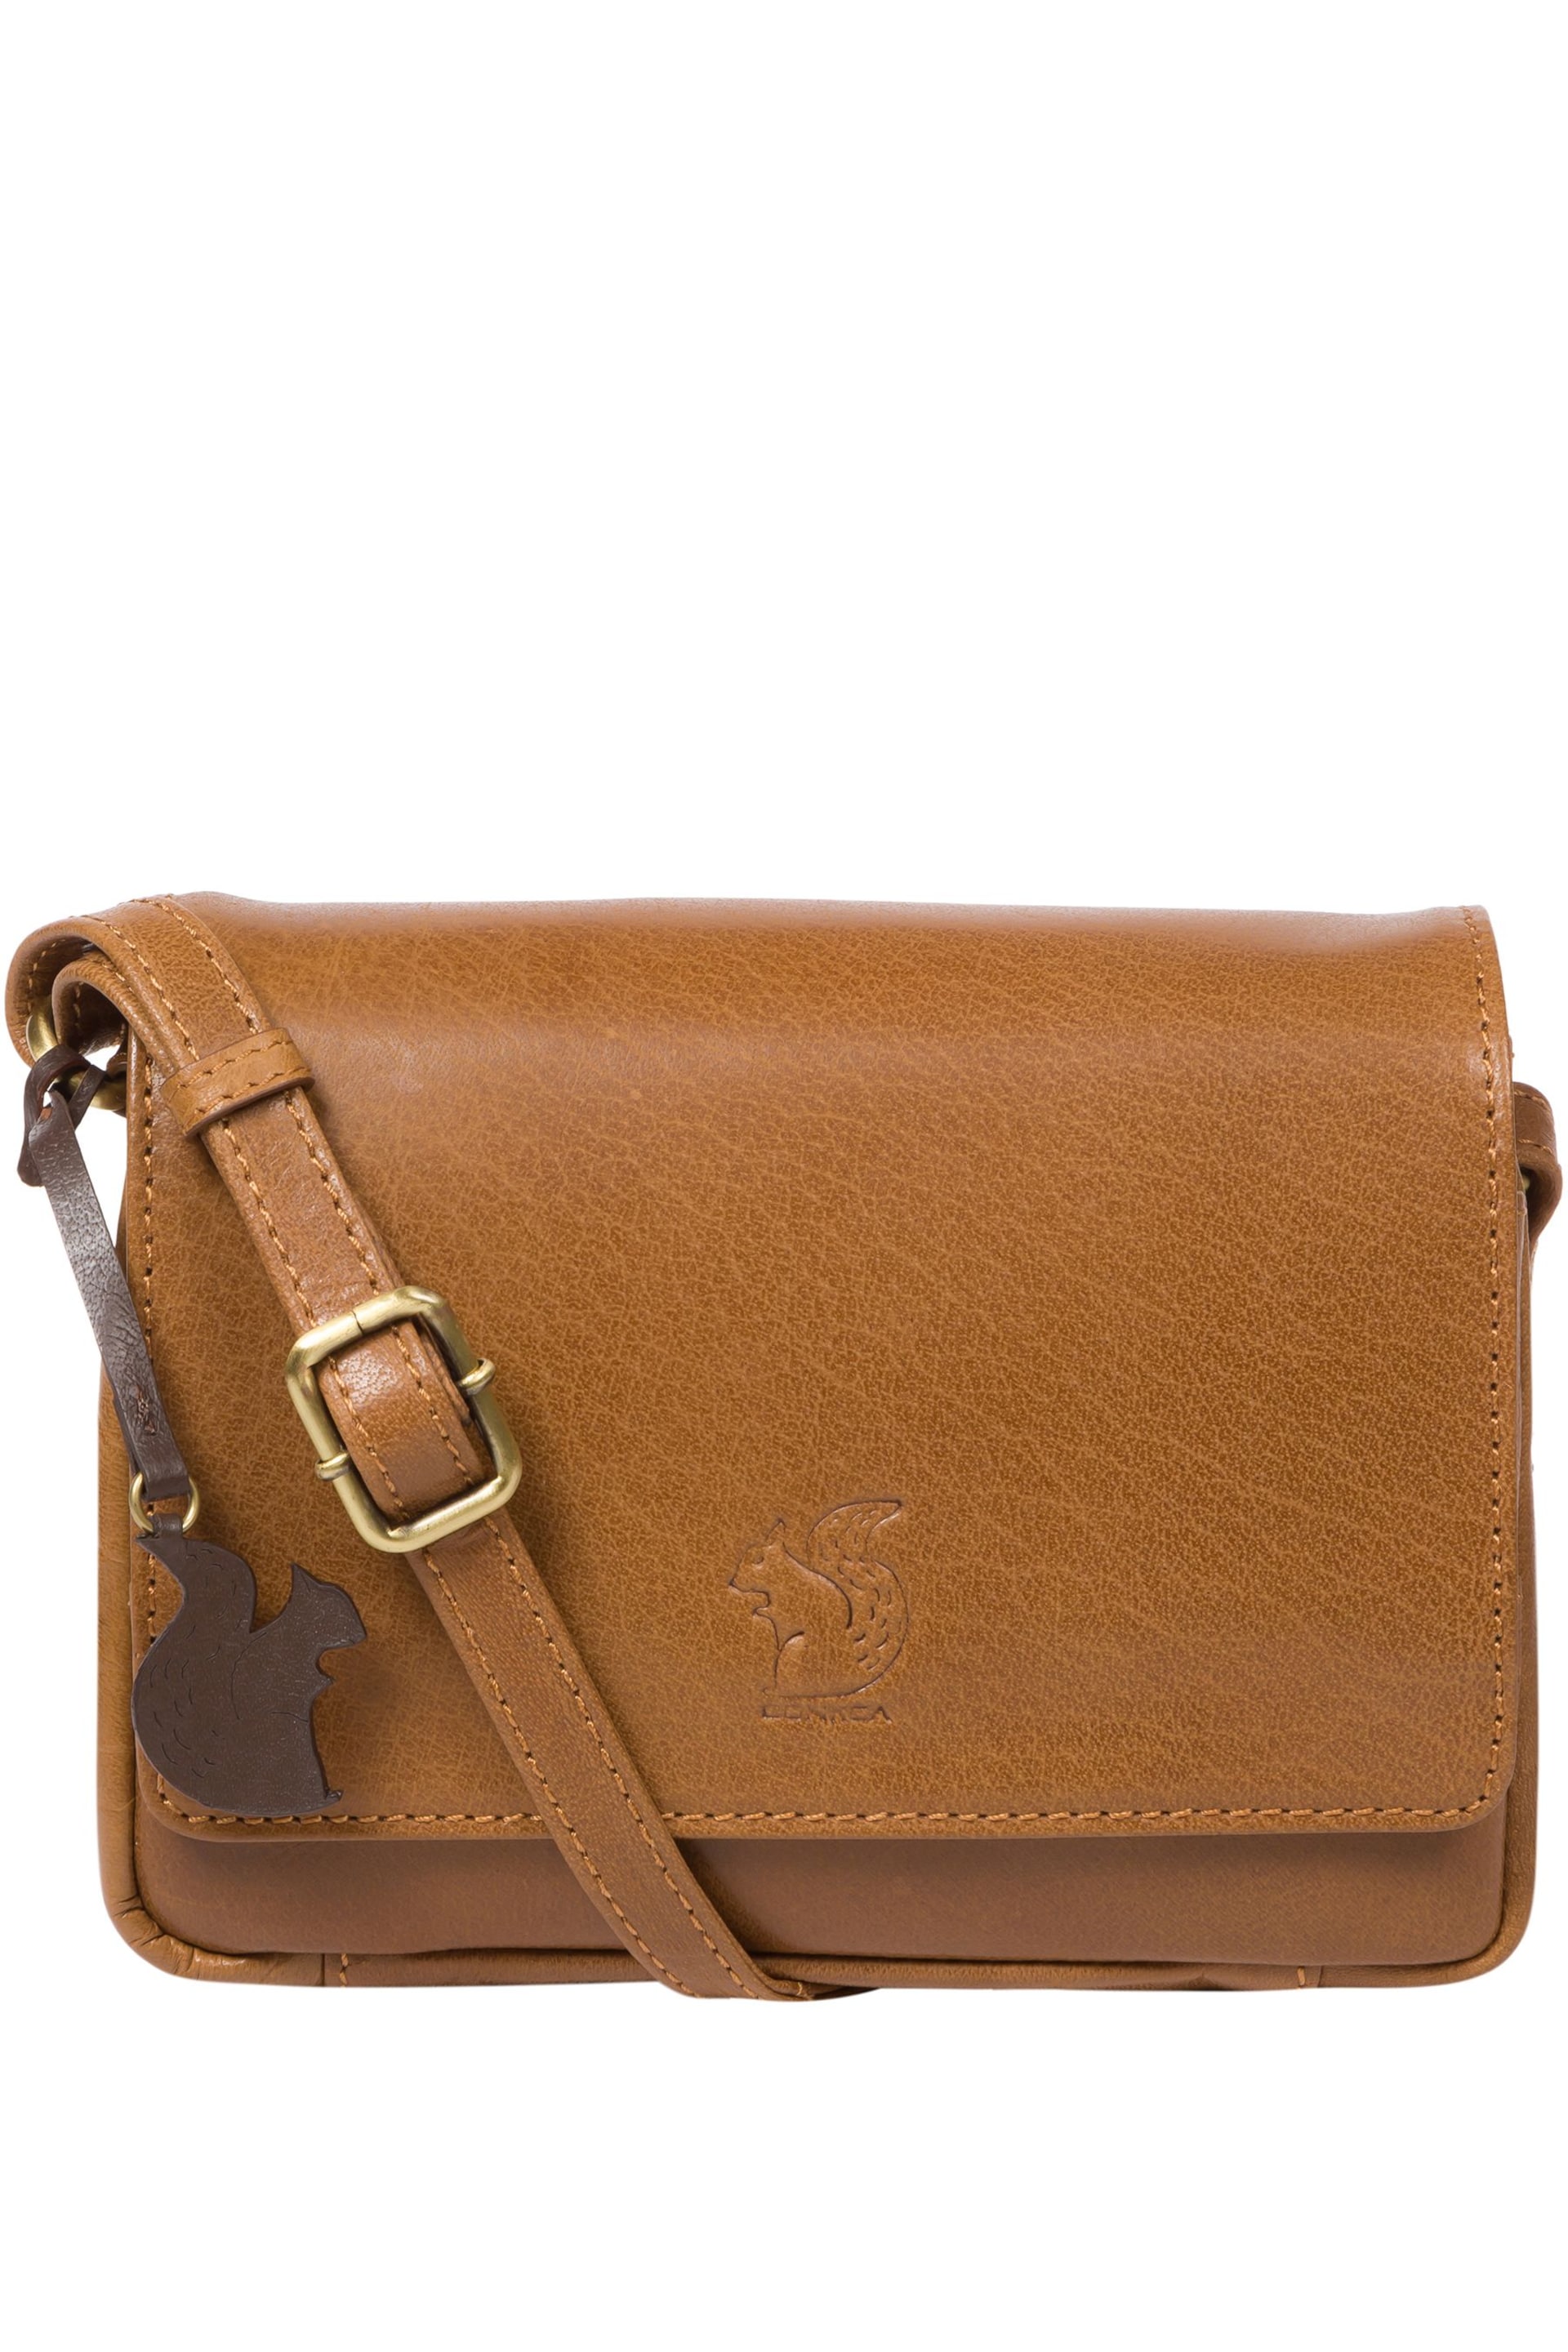 Conkca Marta Leather Cross-Body Bag - Image 1 of 5